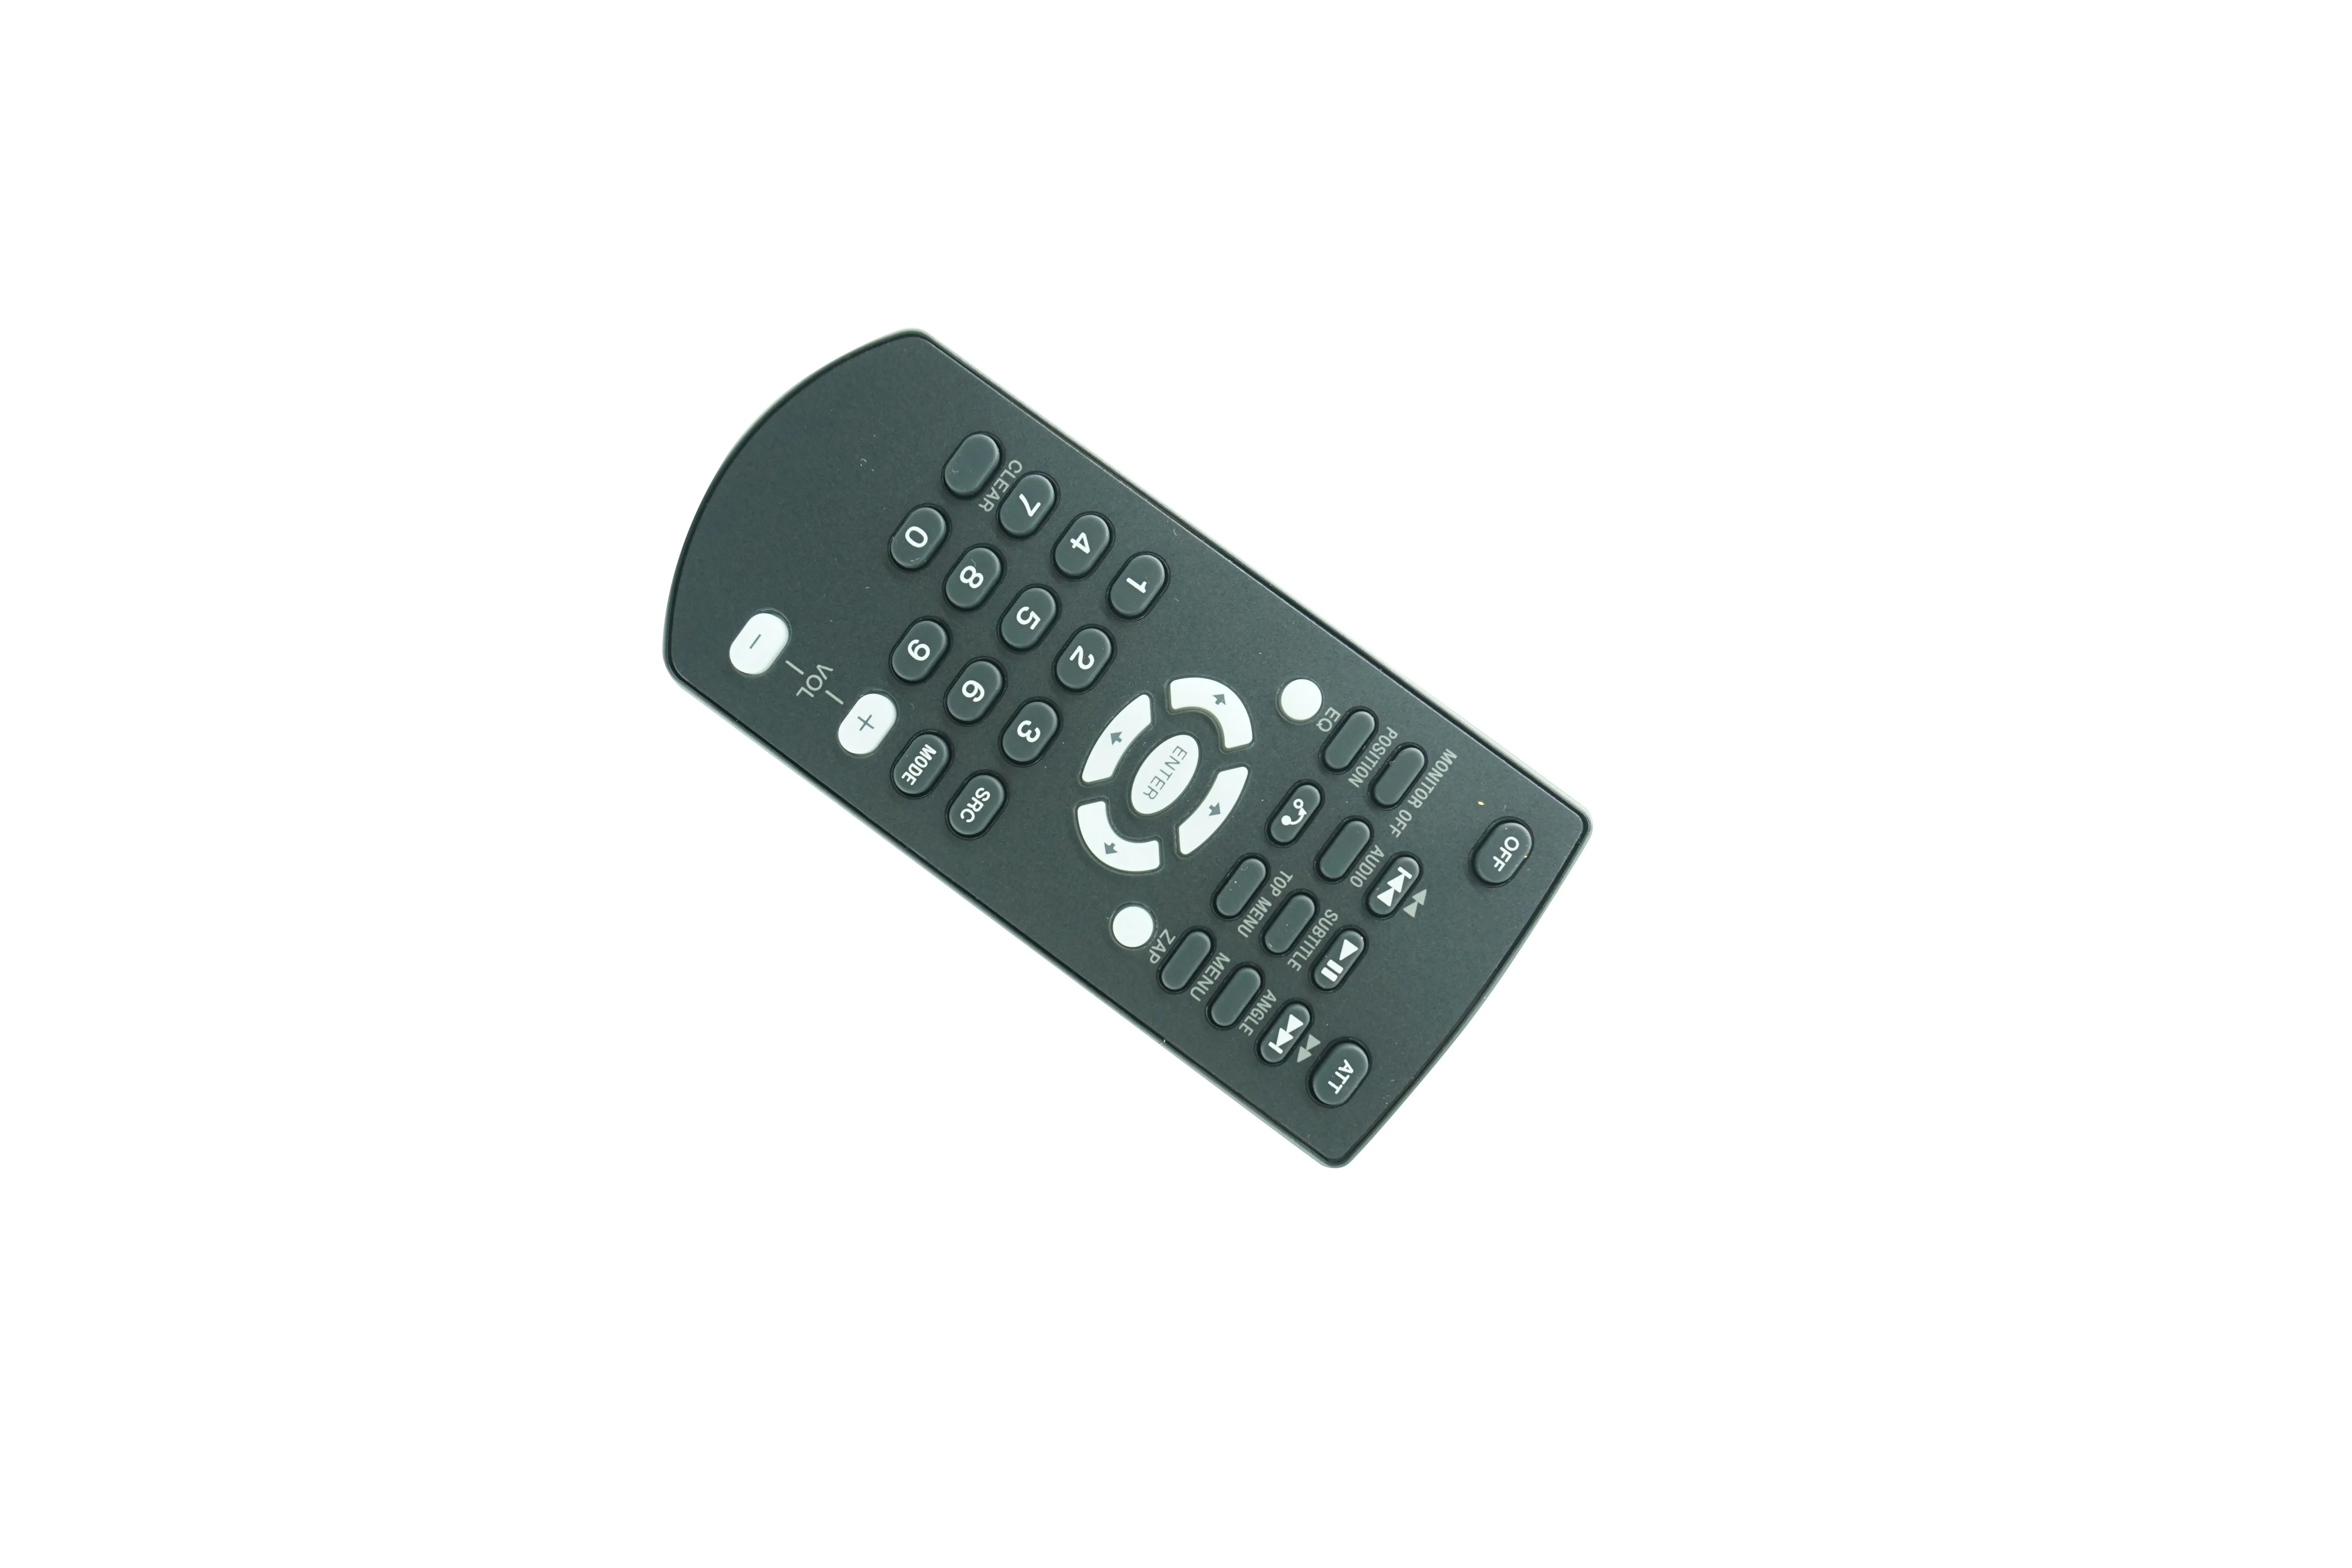 Télécommande pour Sony RM-X171 XAV-AX200 XAV-AX100 XAV-63 XAV-64 XAV-65, récepteur DVD Mobile de voiture, lecteur multi-disques